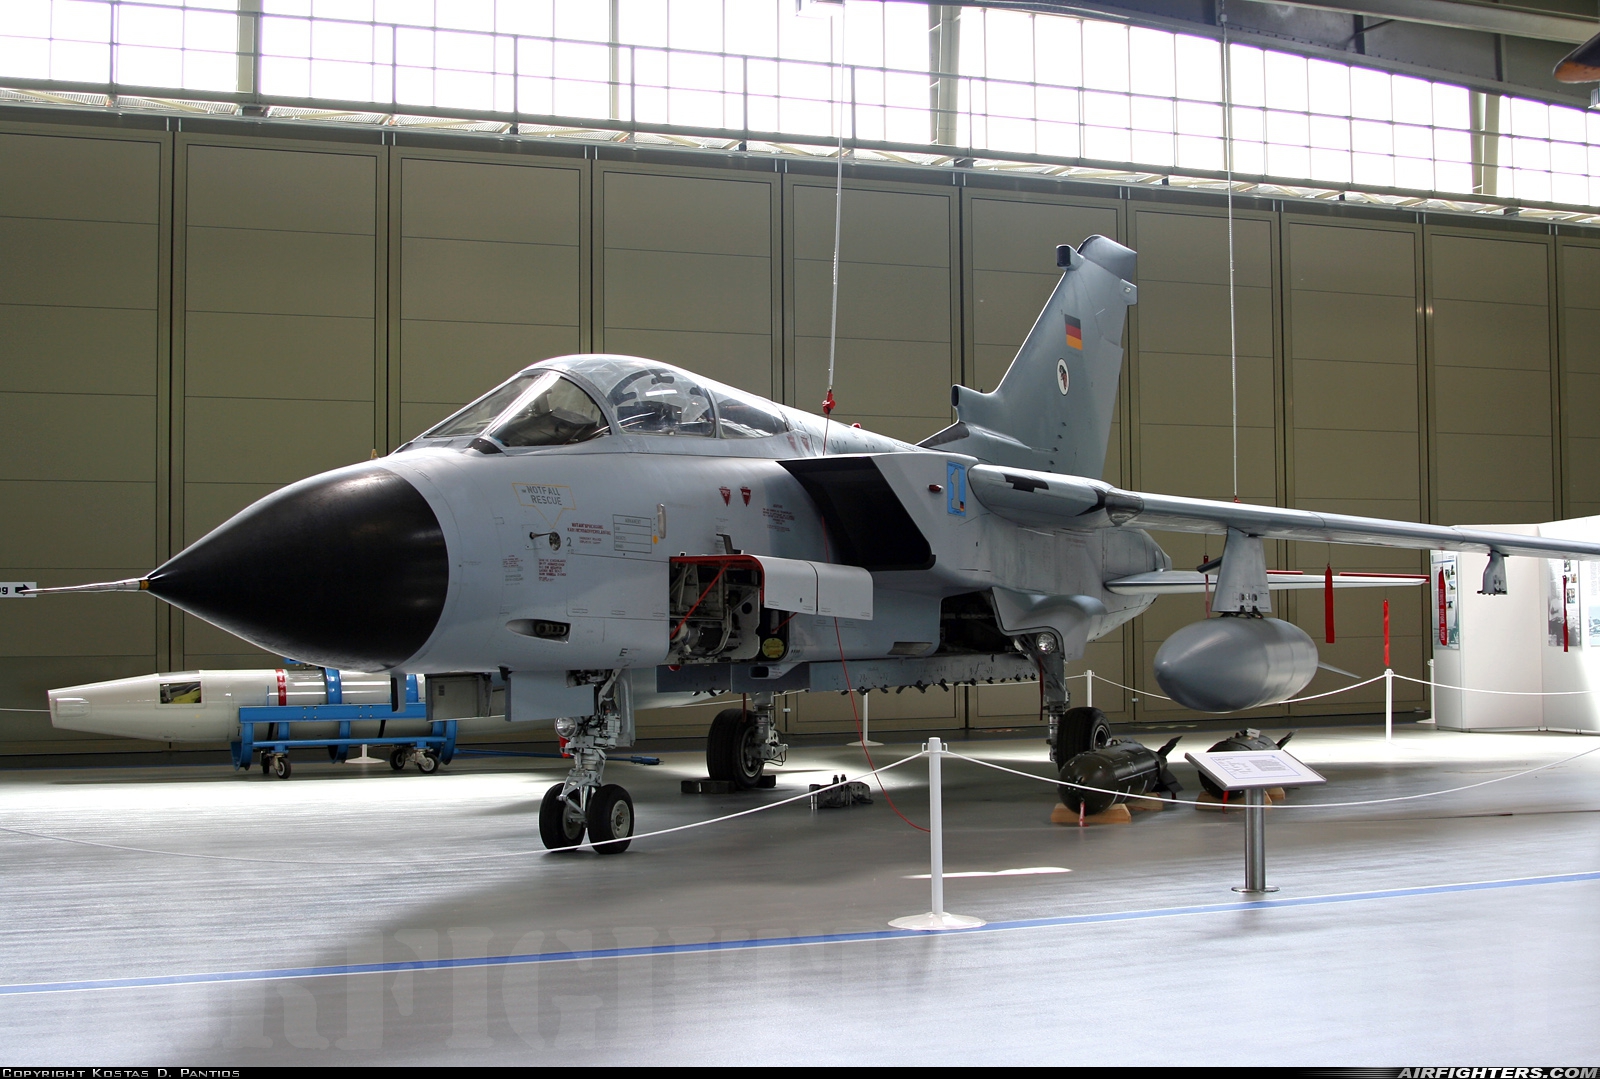 Germany - Air Force Panavia Tornado IDS 44+68 at Berlin - Gatow (GWW / EDUG), Germany